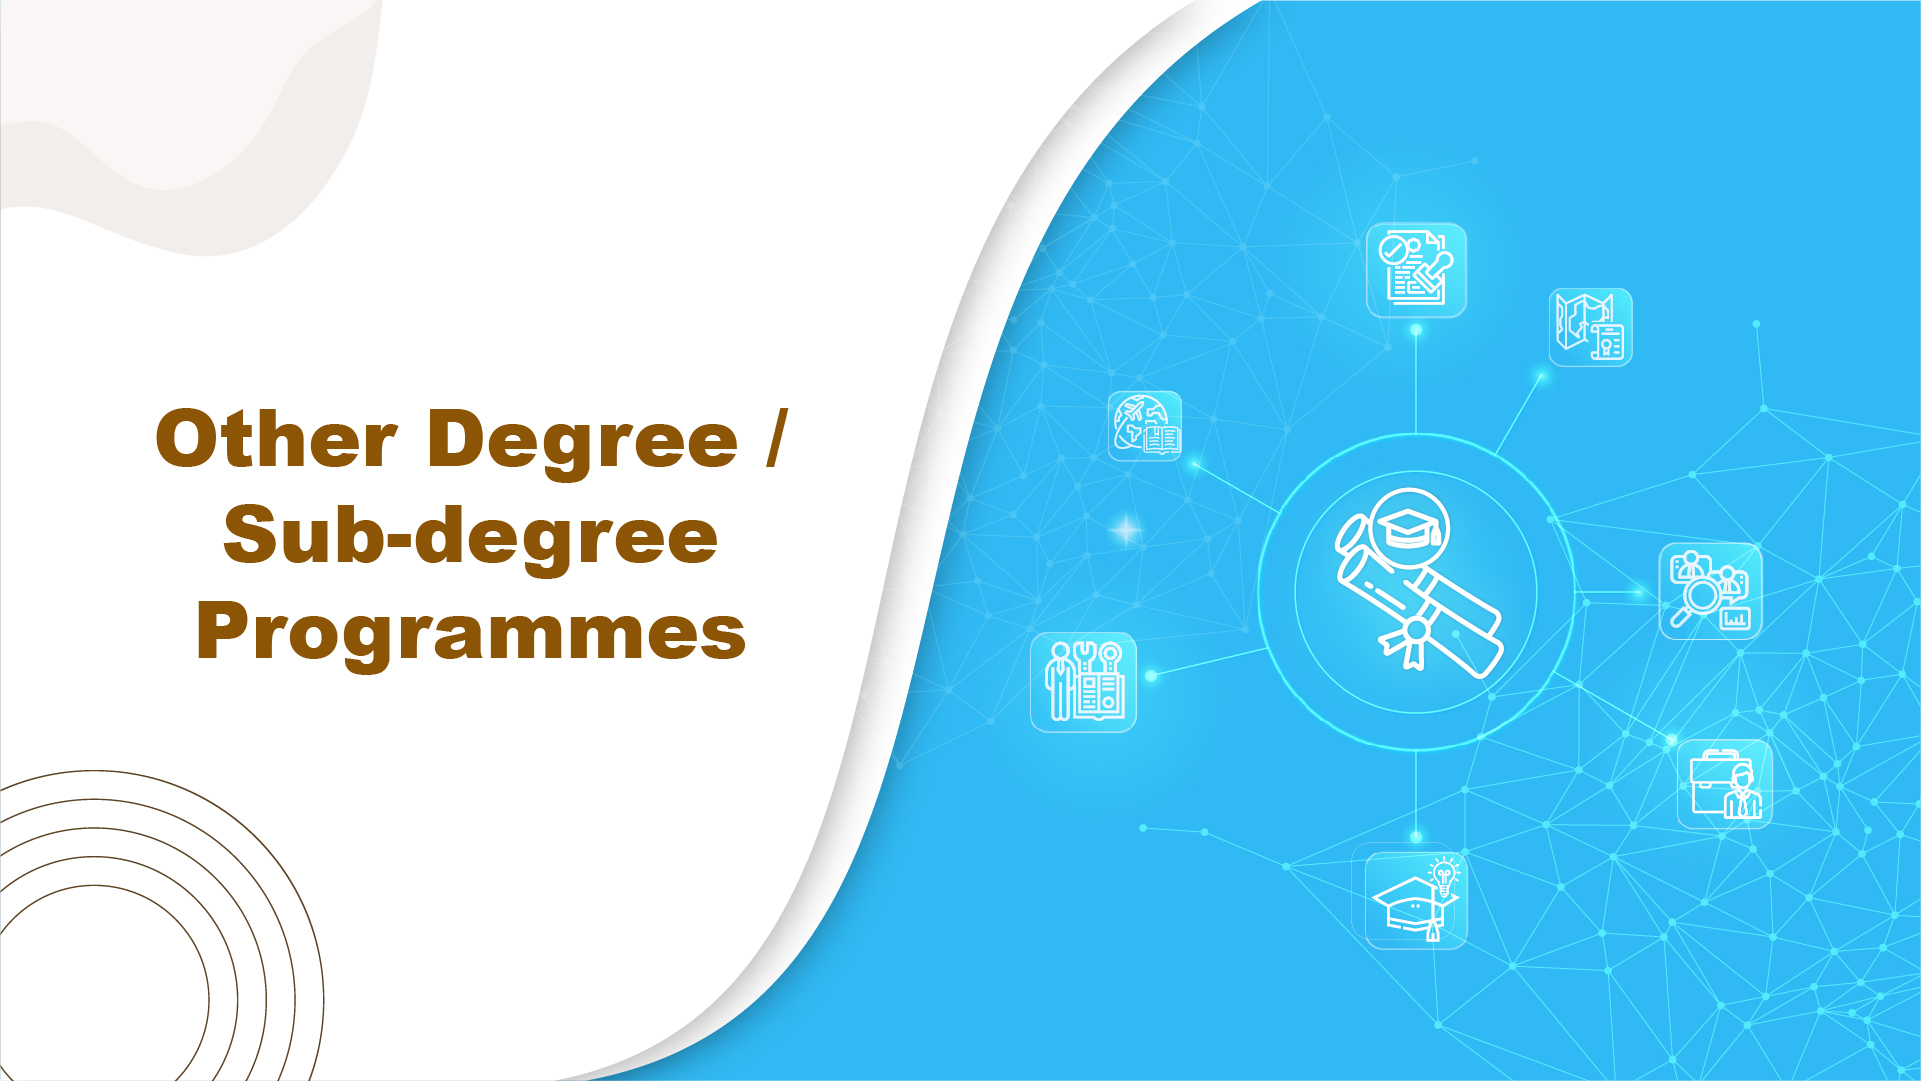 Other Degree / Sub-degree Programmes